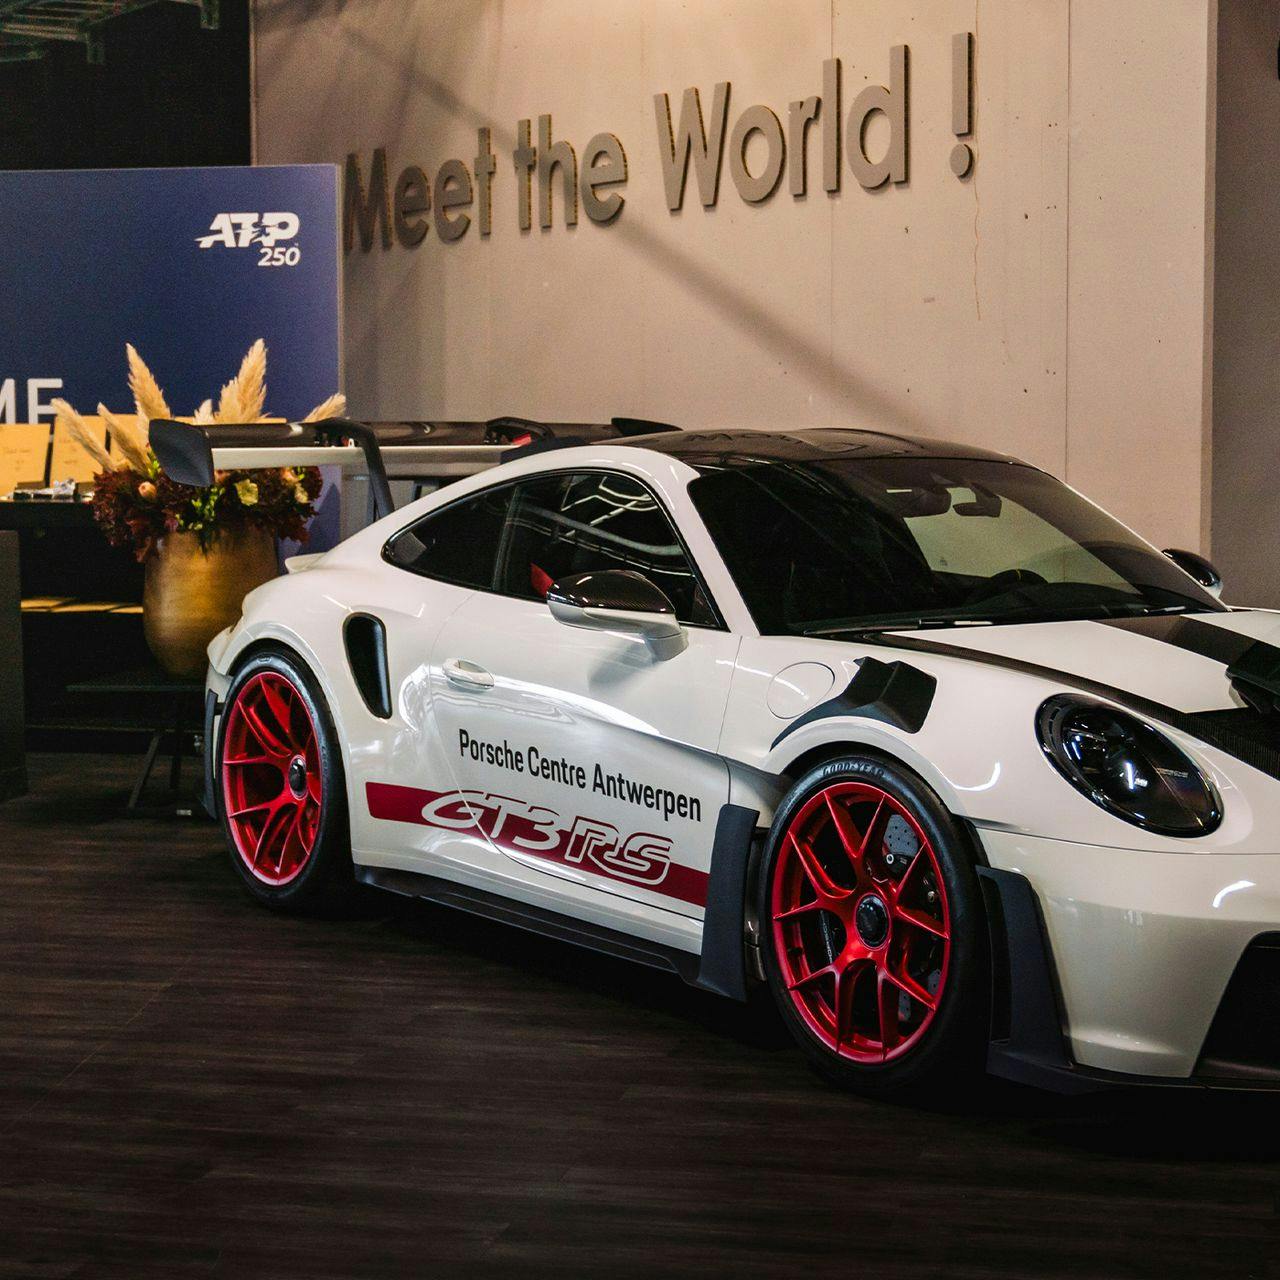 Porsche Centre Antwerpen sponsor of the European Open 2023